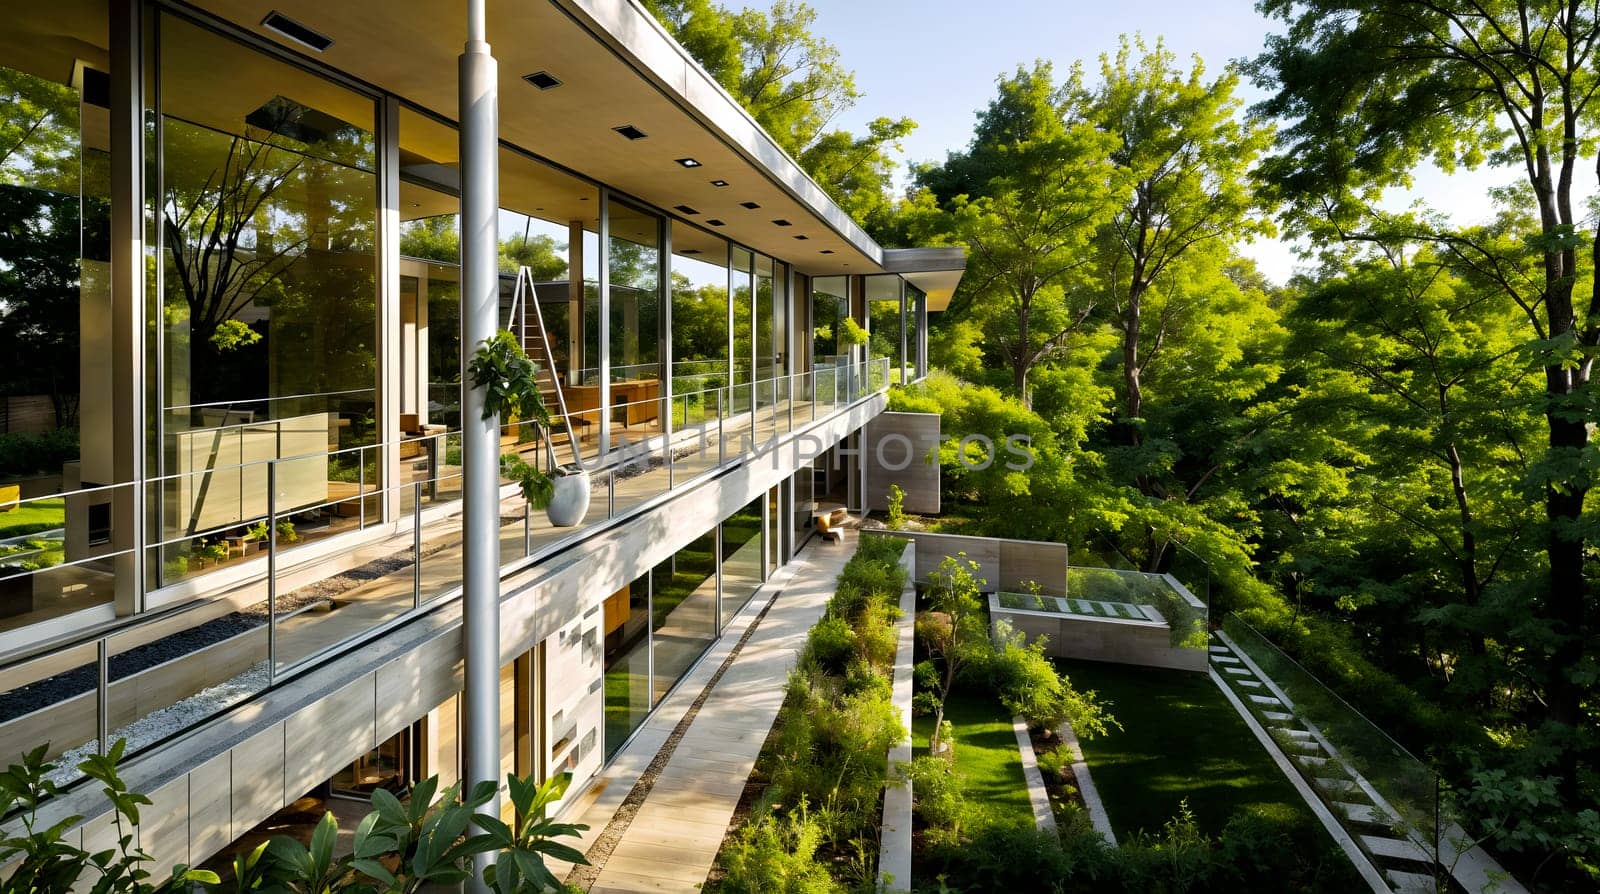 Modern Glass House Nestled in Lush Greenery During Daytime by chrisroll